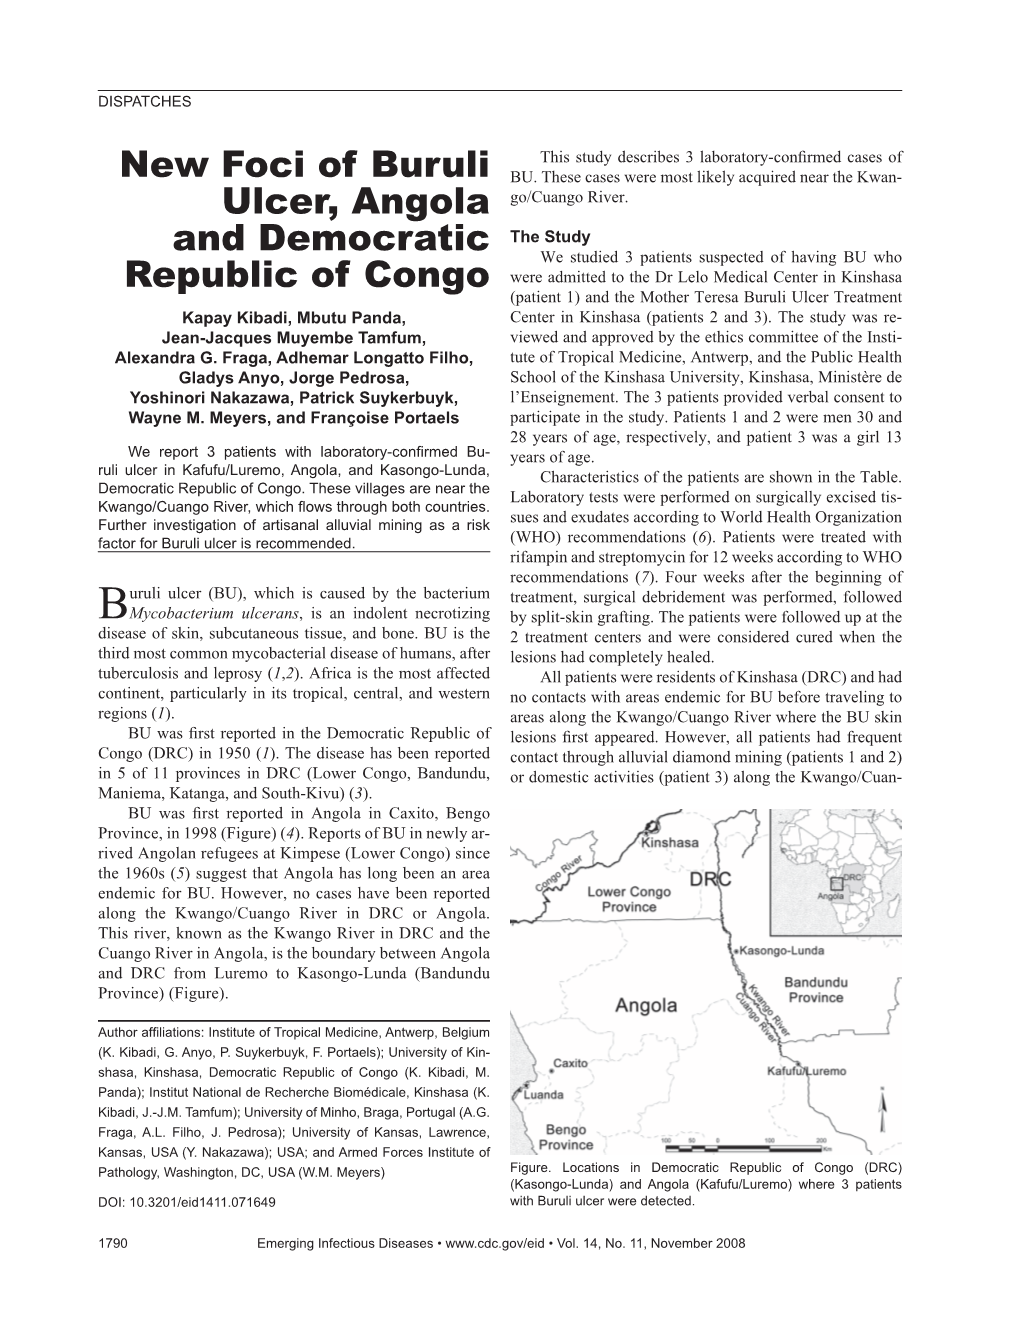 New Foci of Buruli Ulcer, Angola and Democratic Republic of Congo